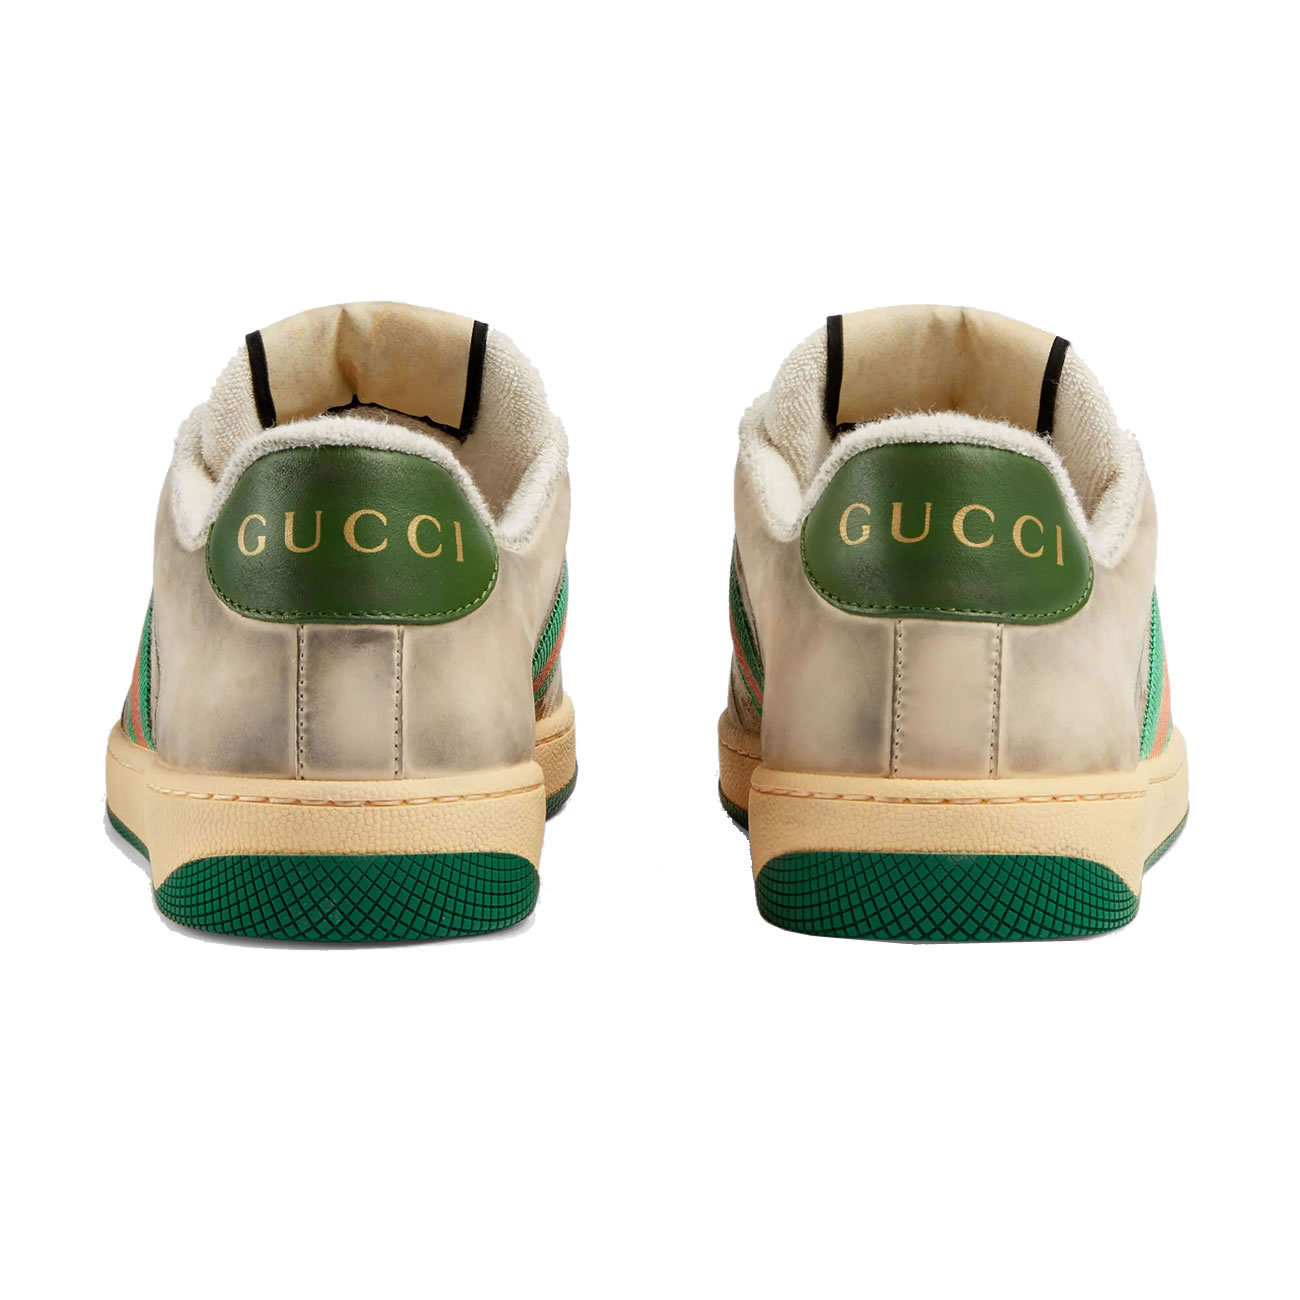 G-U-C-C-I Shoes Sneakers 4 Colors